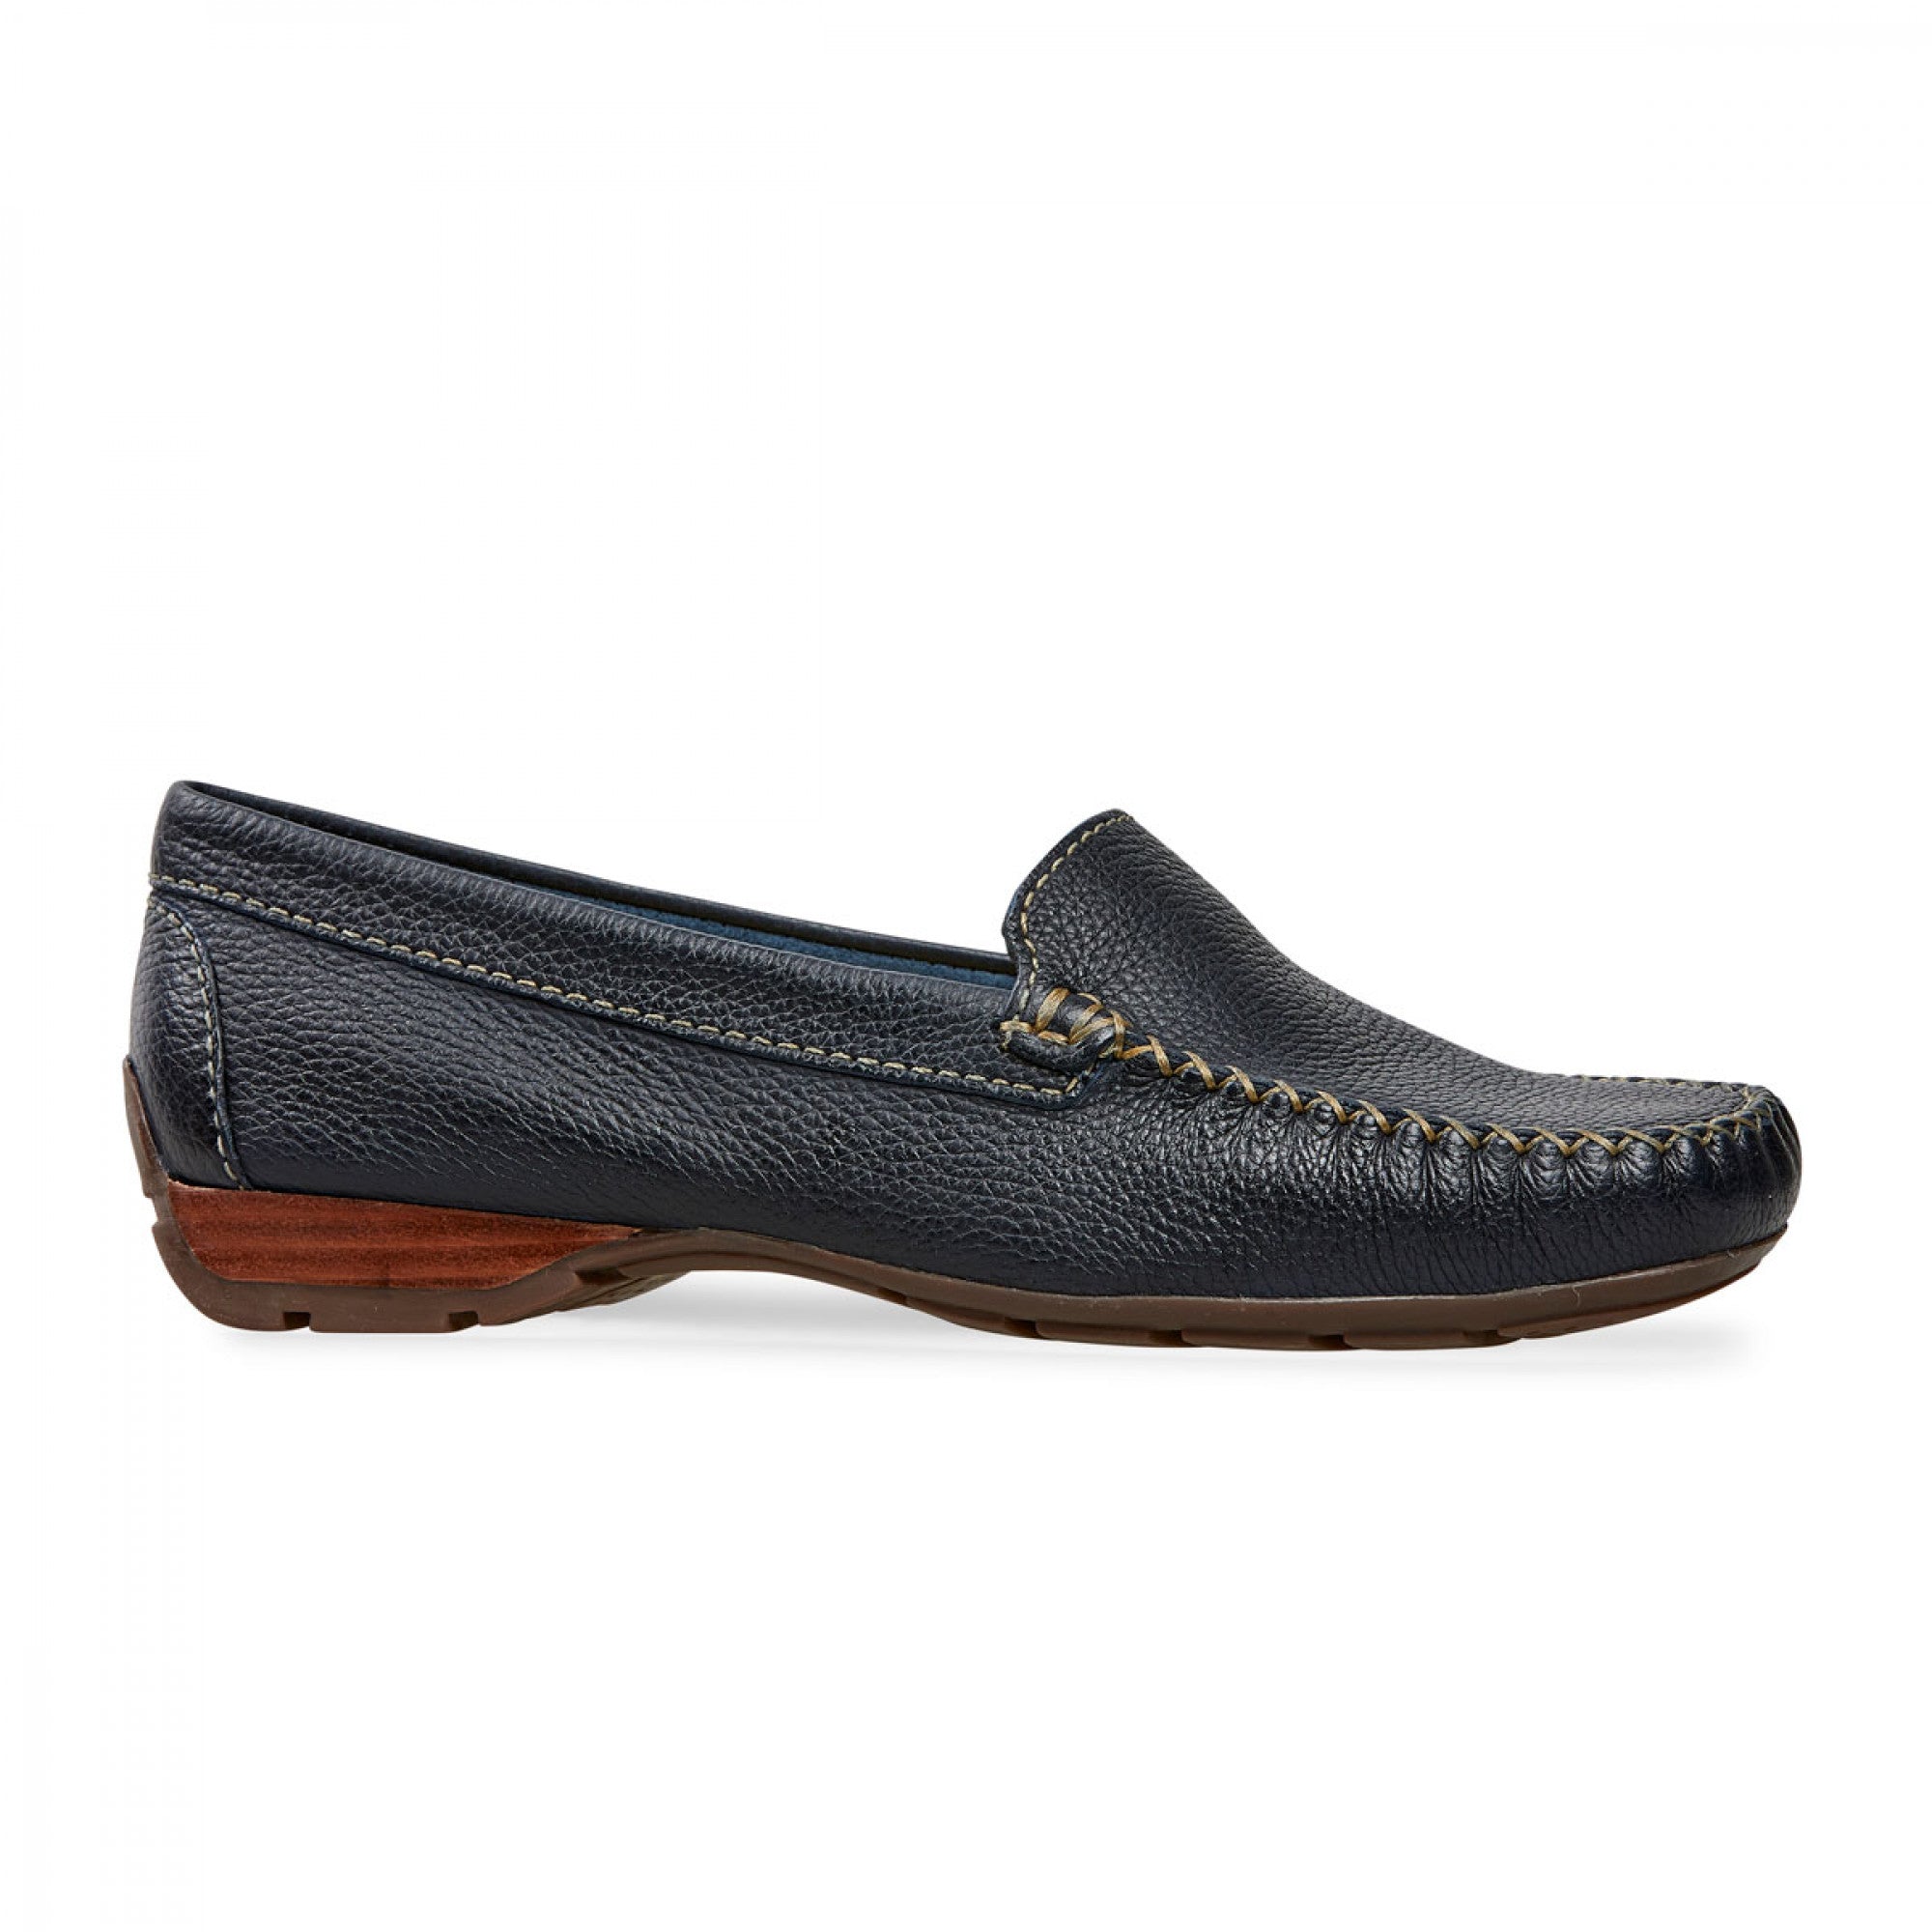 Van Dal Sanson Elba Blue Navy Soft Leather Loafer Driving Shoes